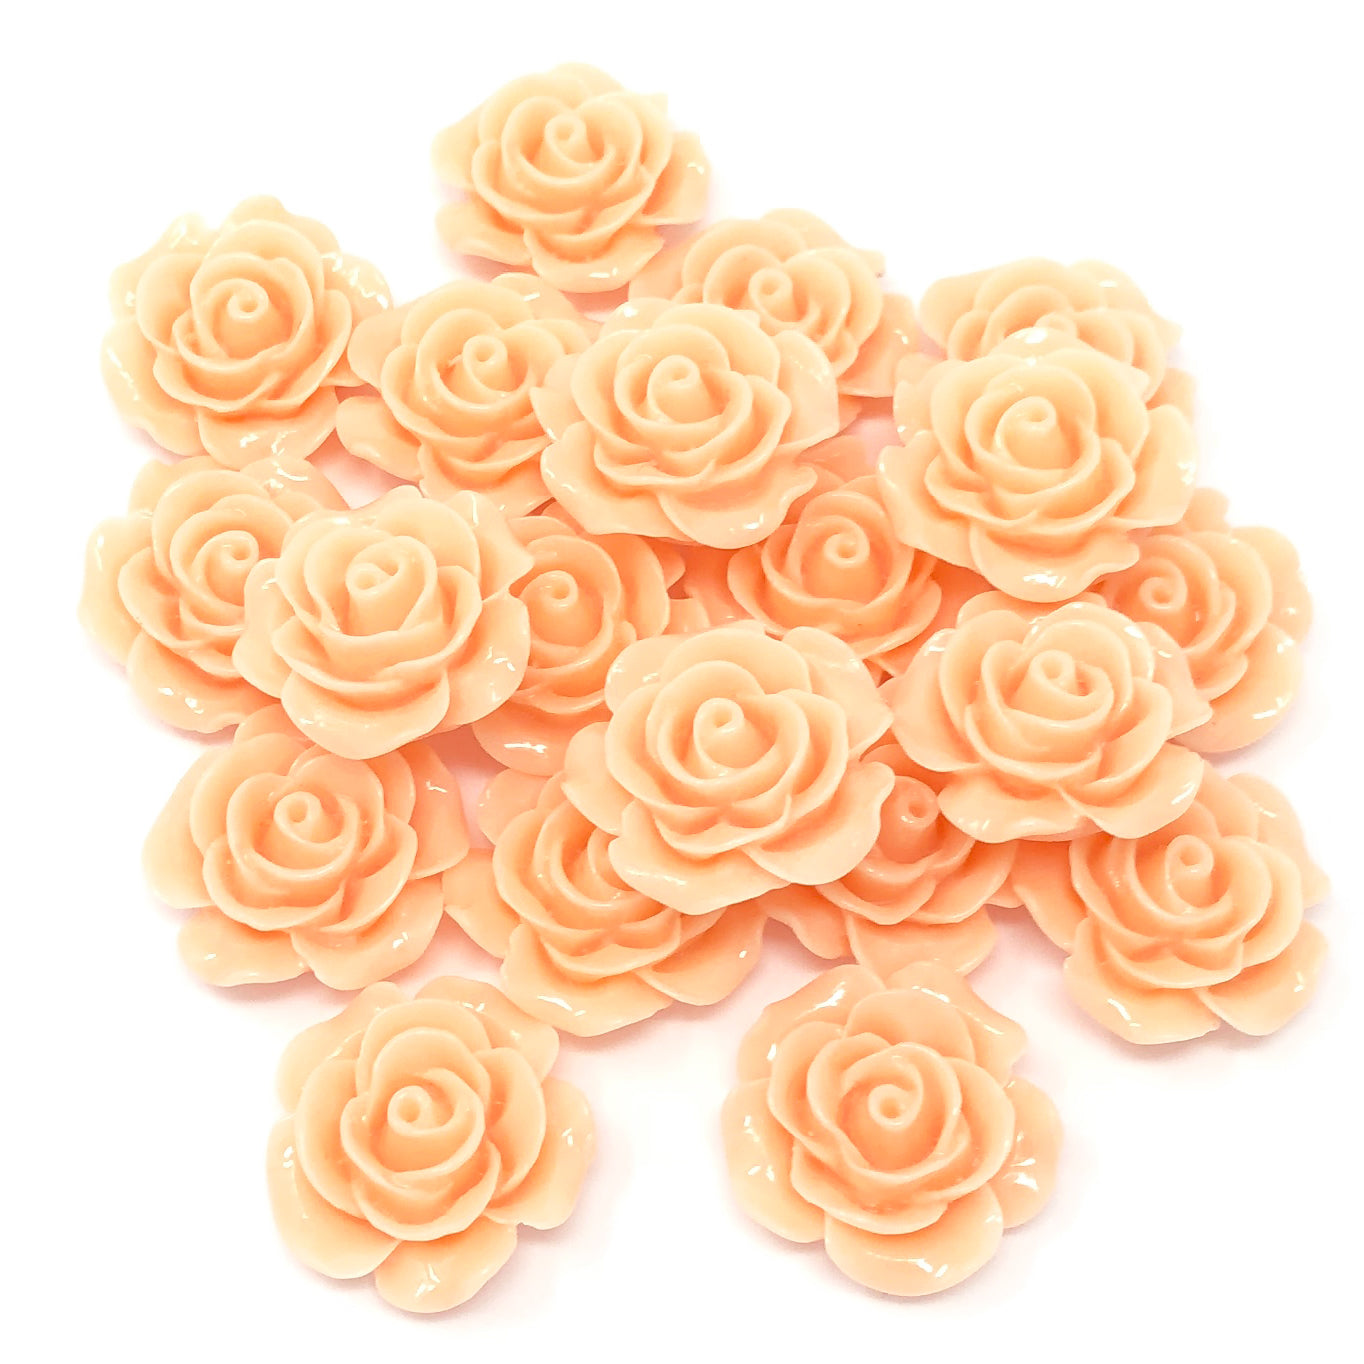 Peach 20mm Resin Roses Flatbacks - Pack of 20